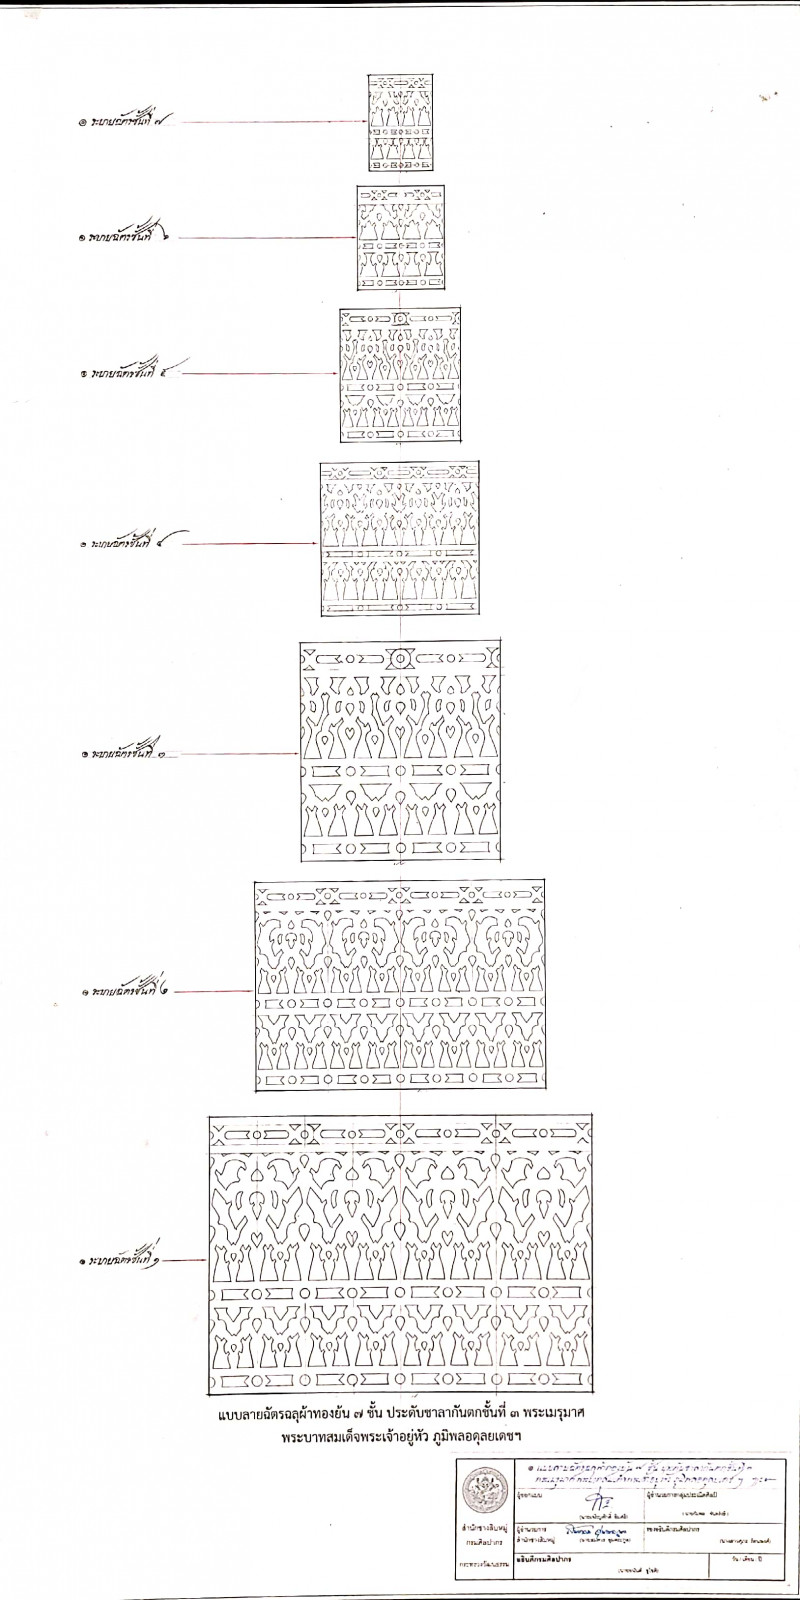 photo-การออกแบบฉัตรฉลุผ้าทองย่น ๗ ชั้น  ประดับชาลากันตกชั้นที่ ๓ เพื่อใช้ในงานพระราชพิธีถวาย          พระเพลิงพระบรมศพ  พระบาทสมเด็จพระปรมินทรมหาภูมิพลอดุลเดช